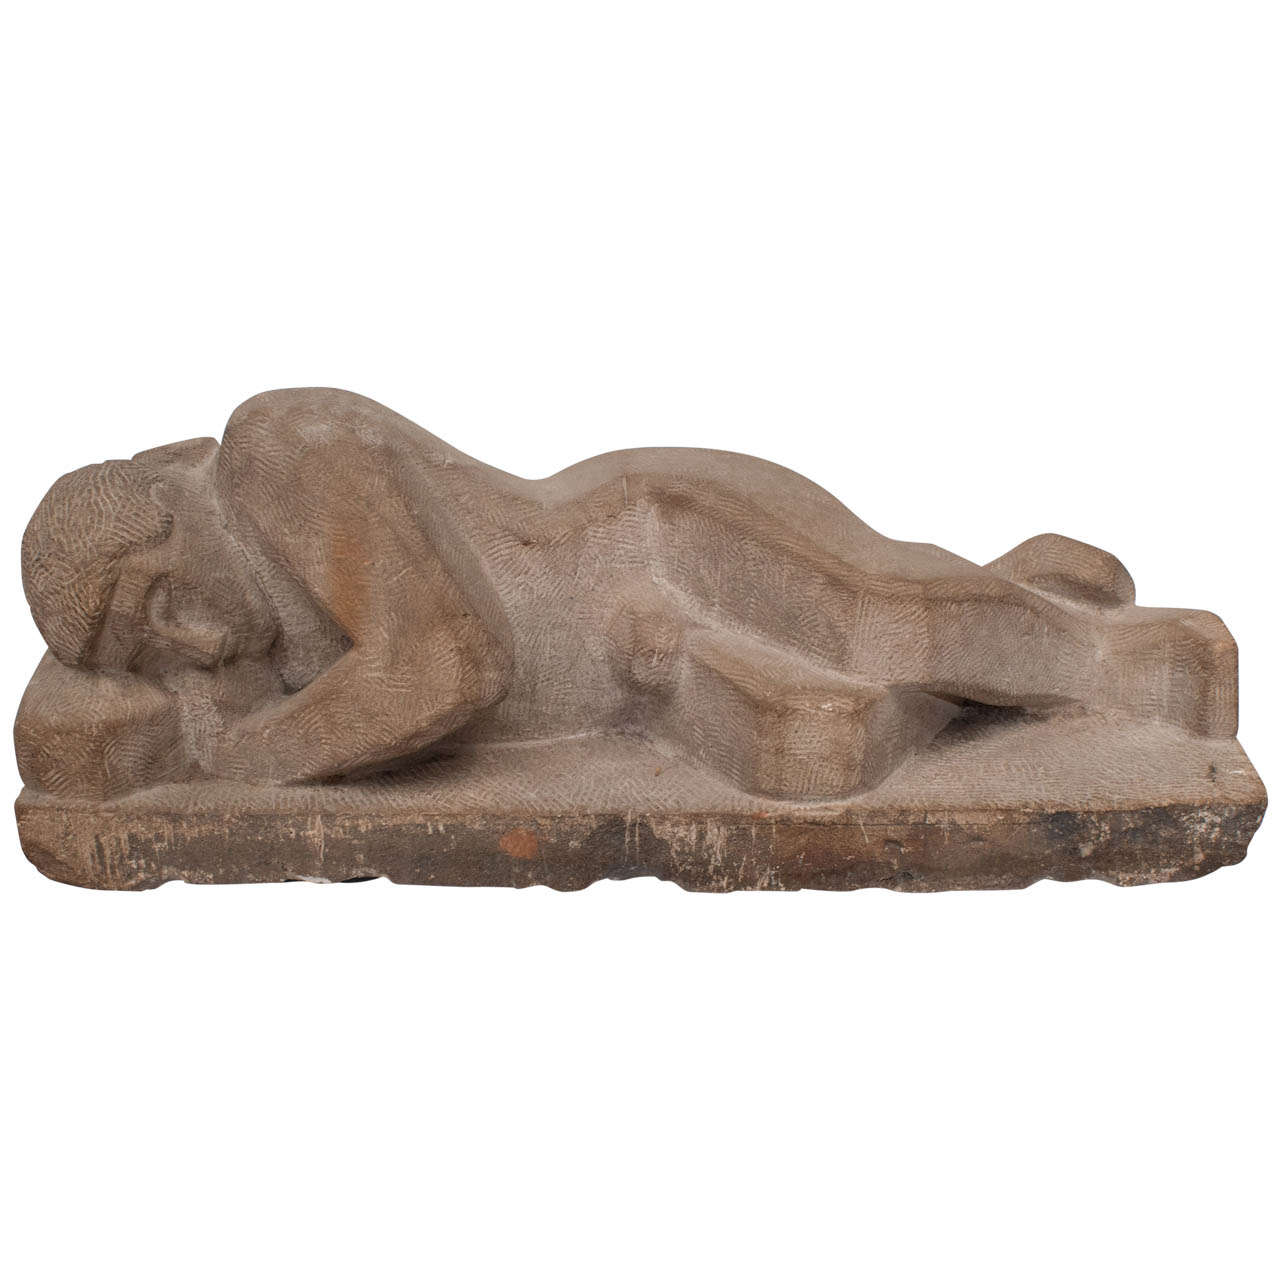 Harvey Moore Figural Stone Sculpture For Sale